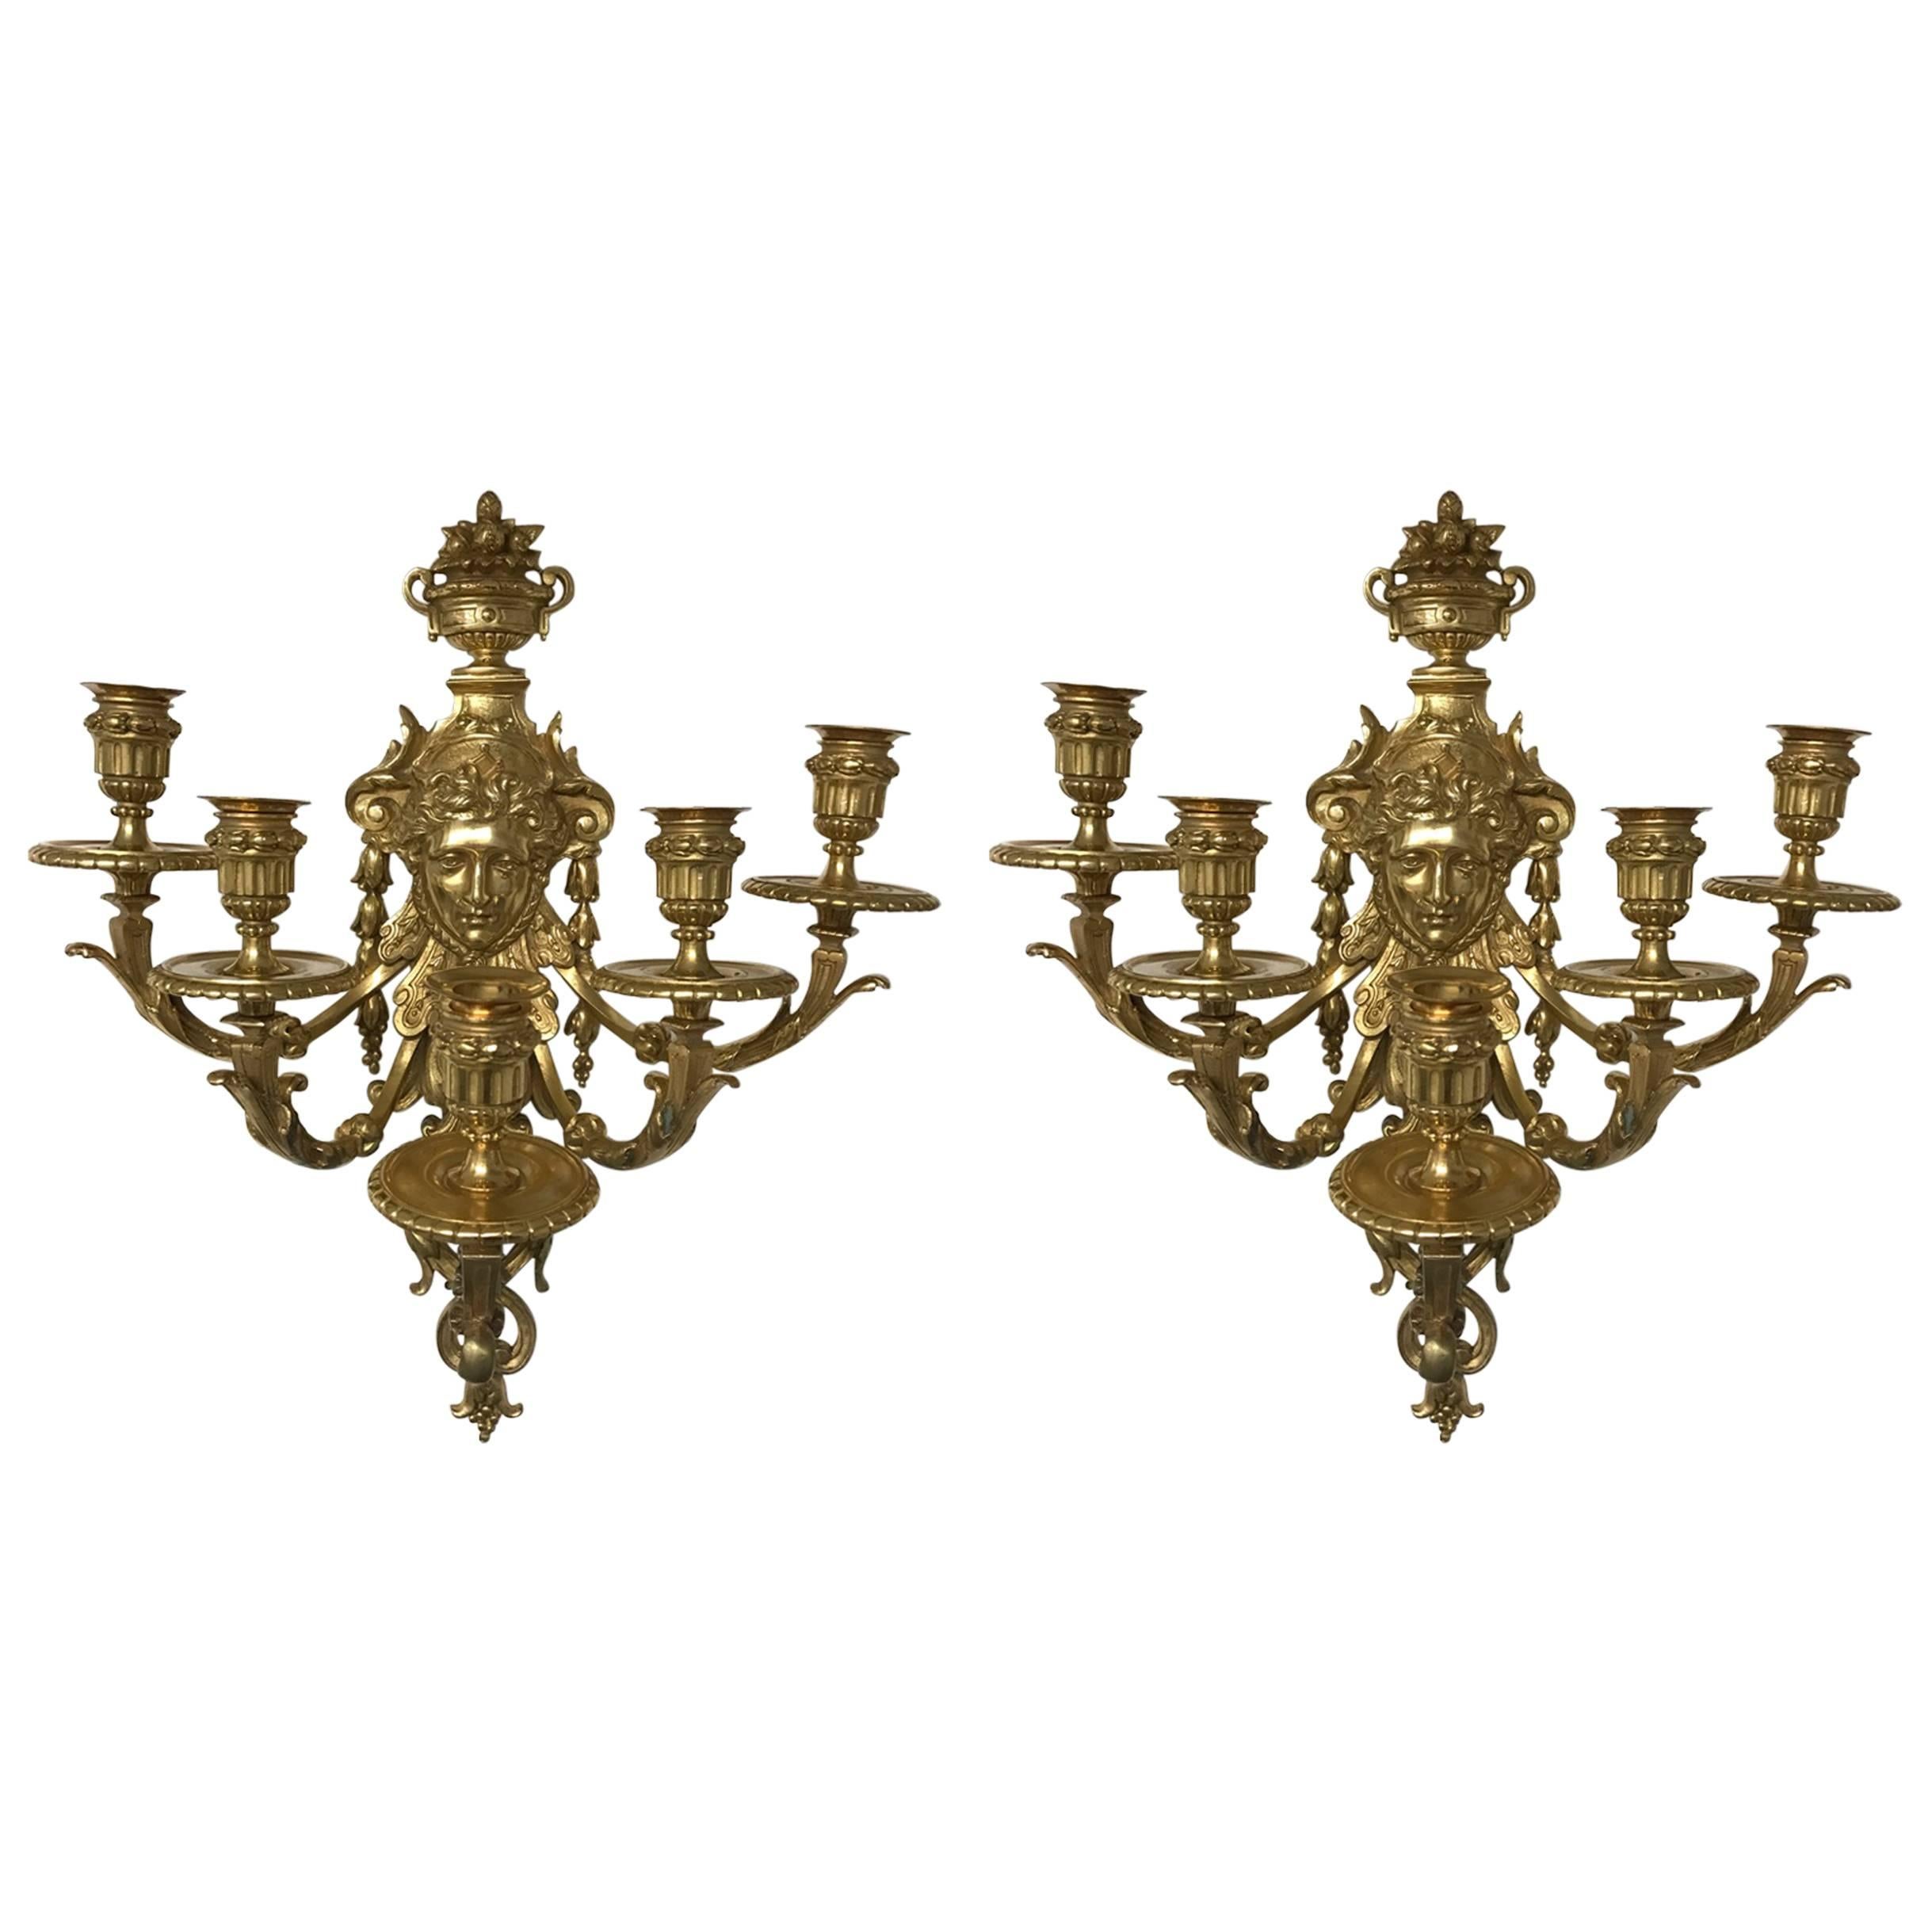 Pair of Five-Light Brass Candelabra Sconces